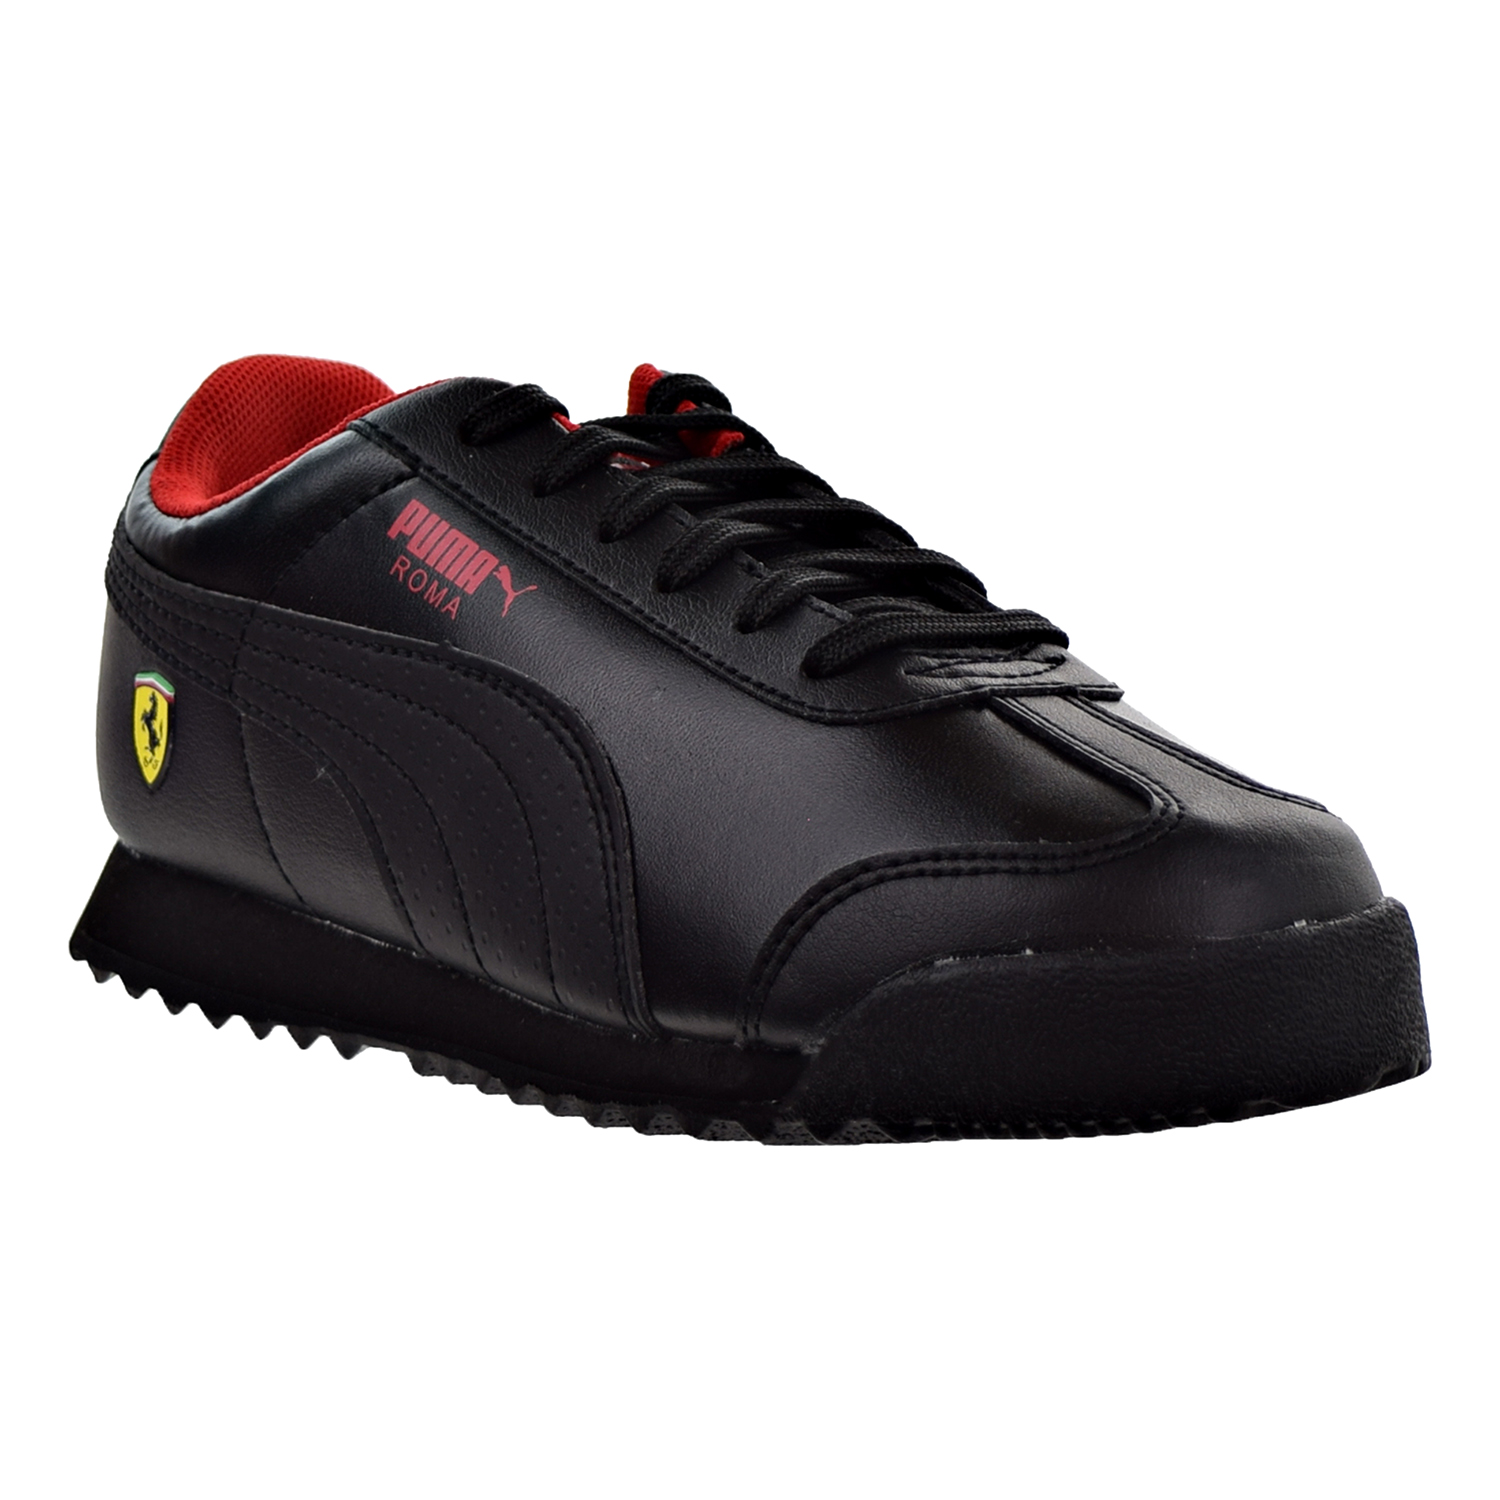 Puma Ferrari Roma Little Kid's Shoes Puma Black-Puma Black 364189-02 | eBay